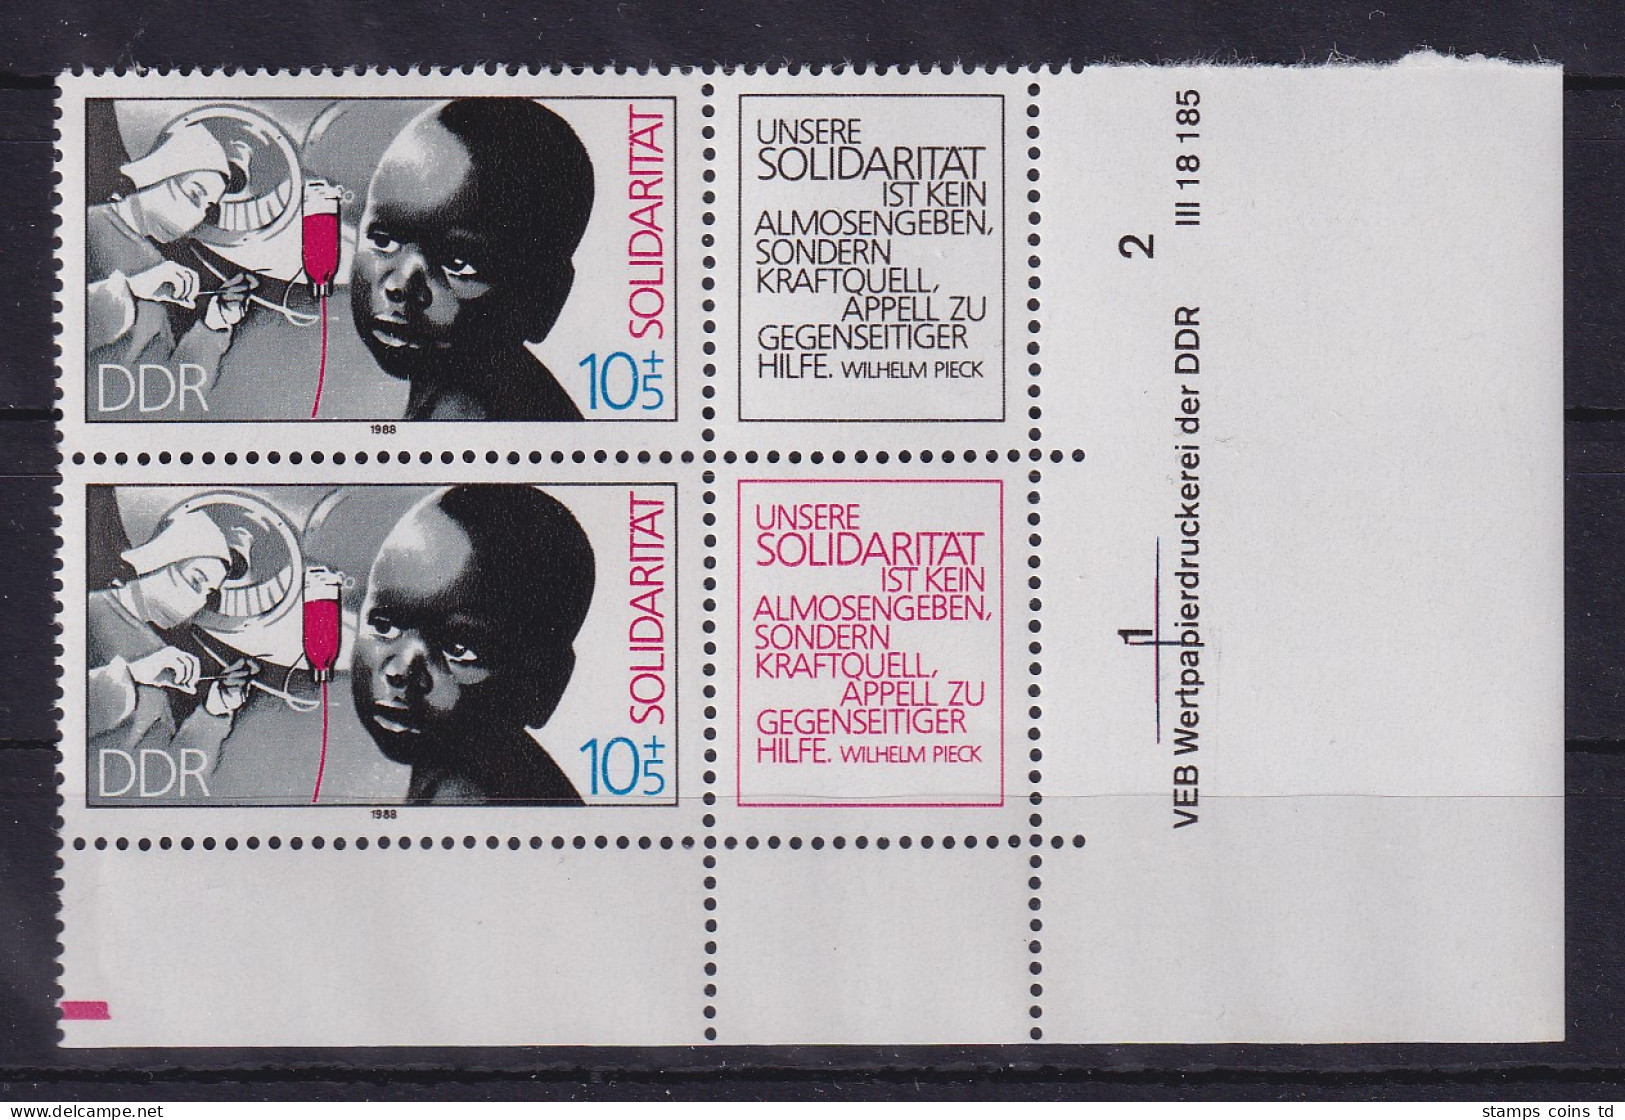 DDR 1988 Solidarität Mi.-Nr. 3202 A/b Eckrandpaar UR Mit Druckvermerk ** - Unused Stamps